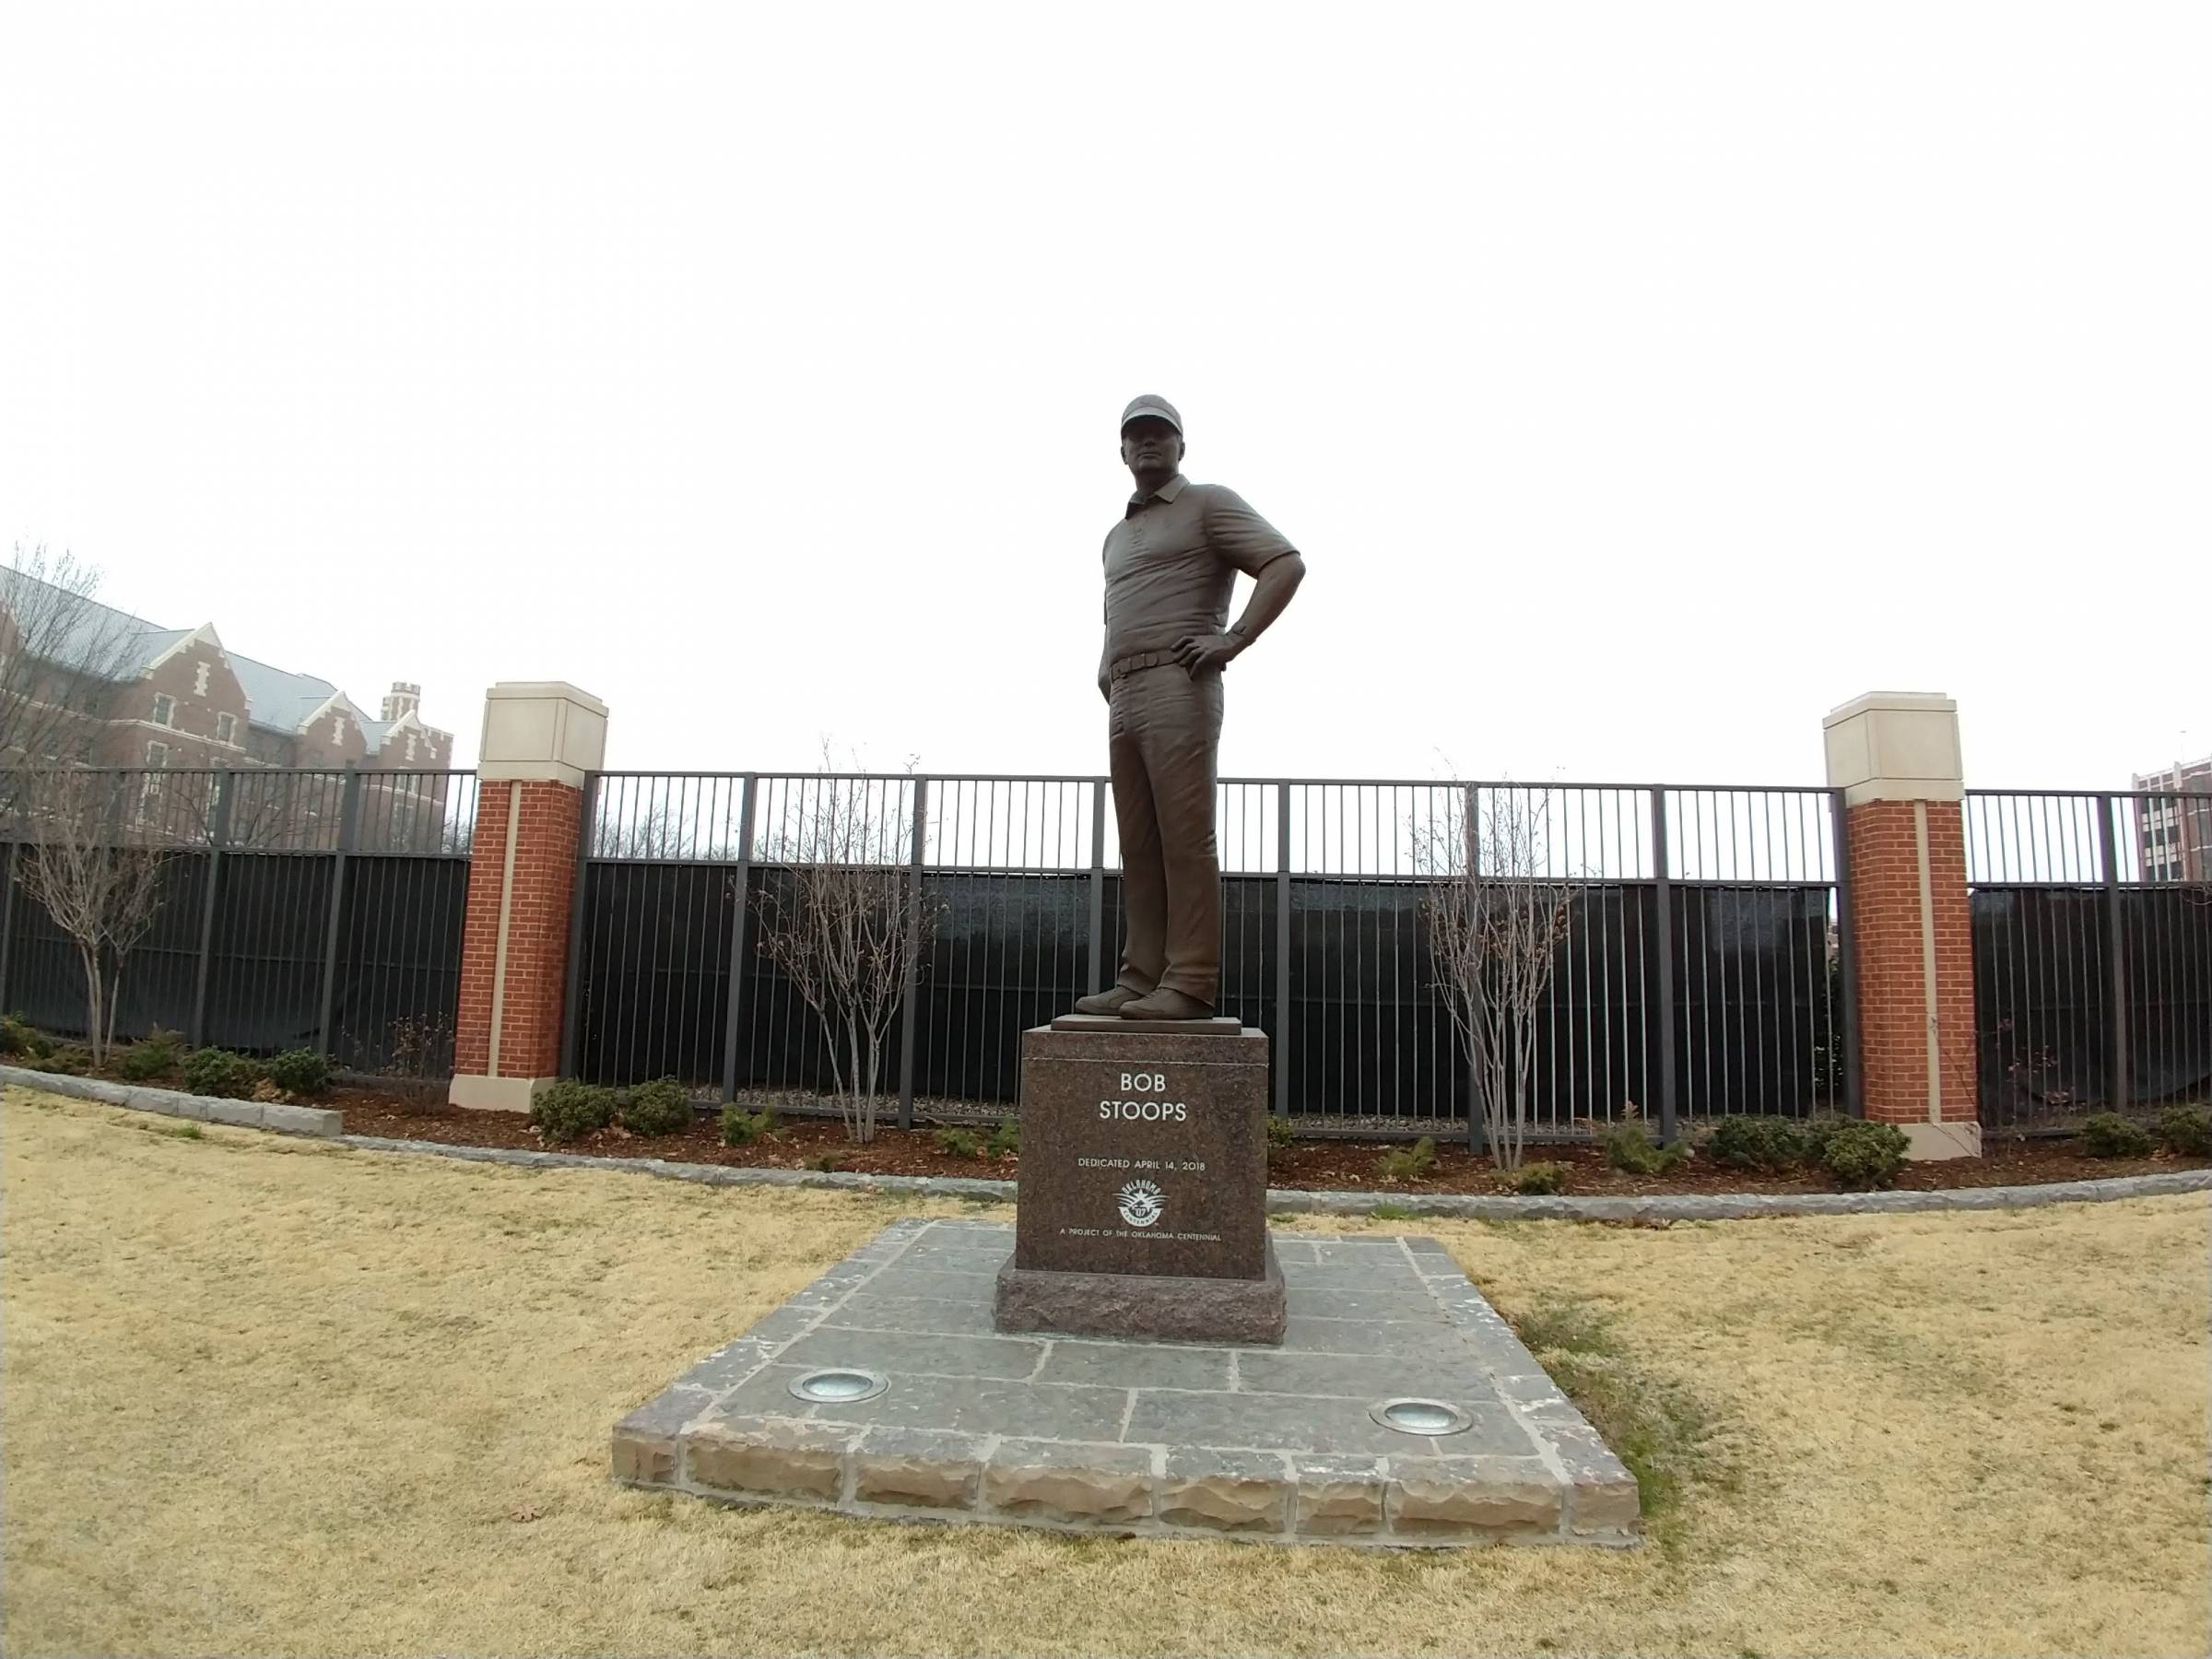 Bob Stoops Statue outside Oklahoma Memorial Stadium